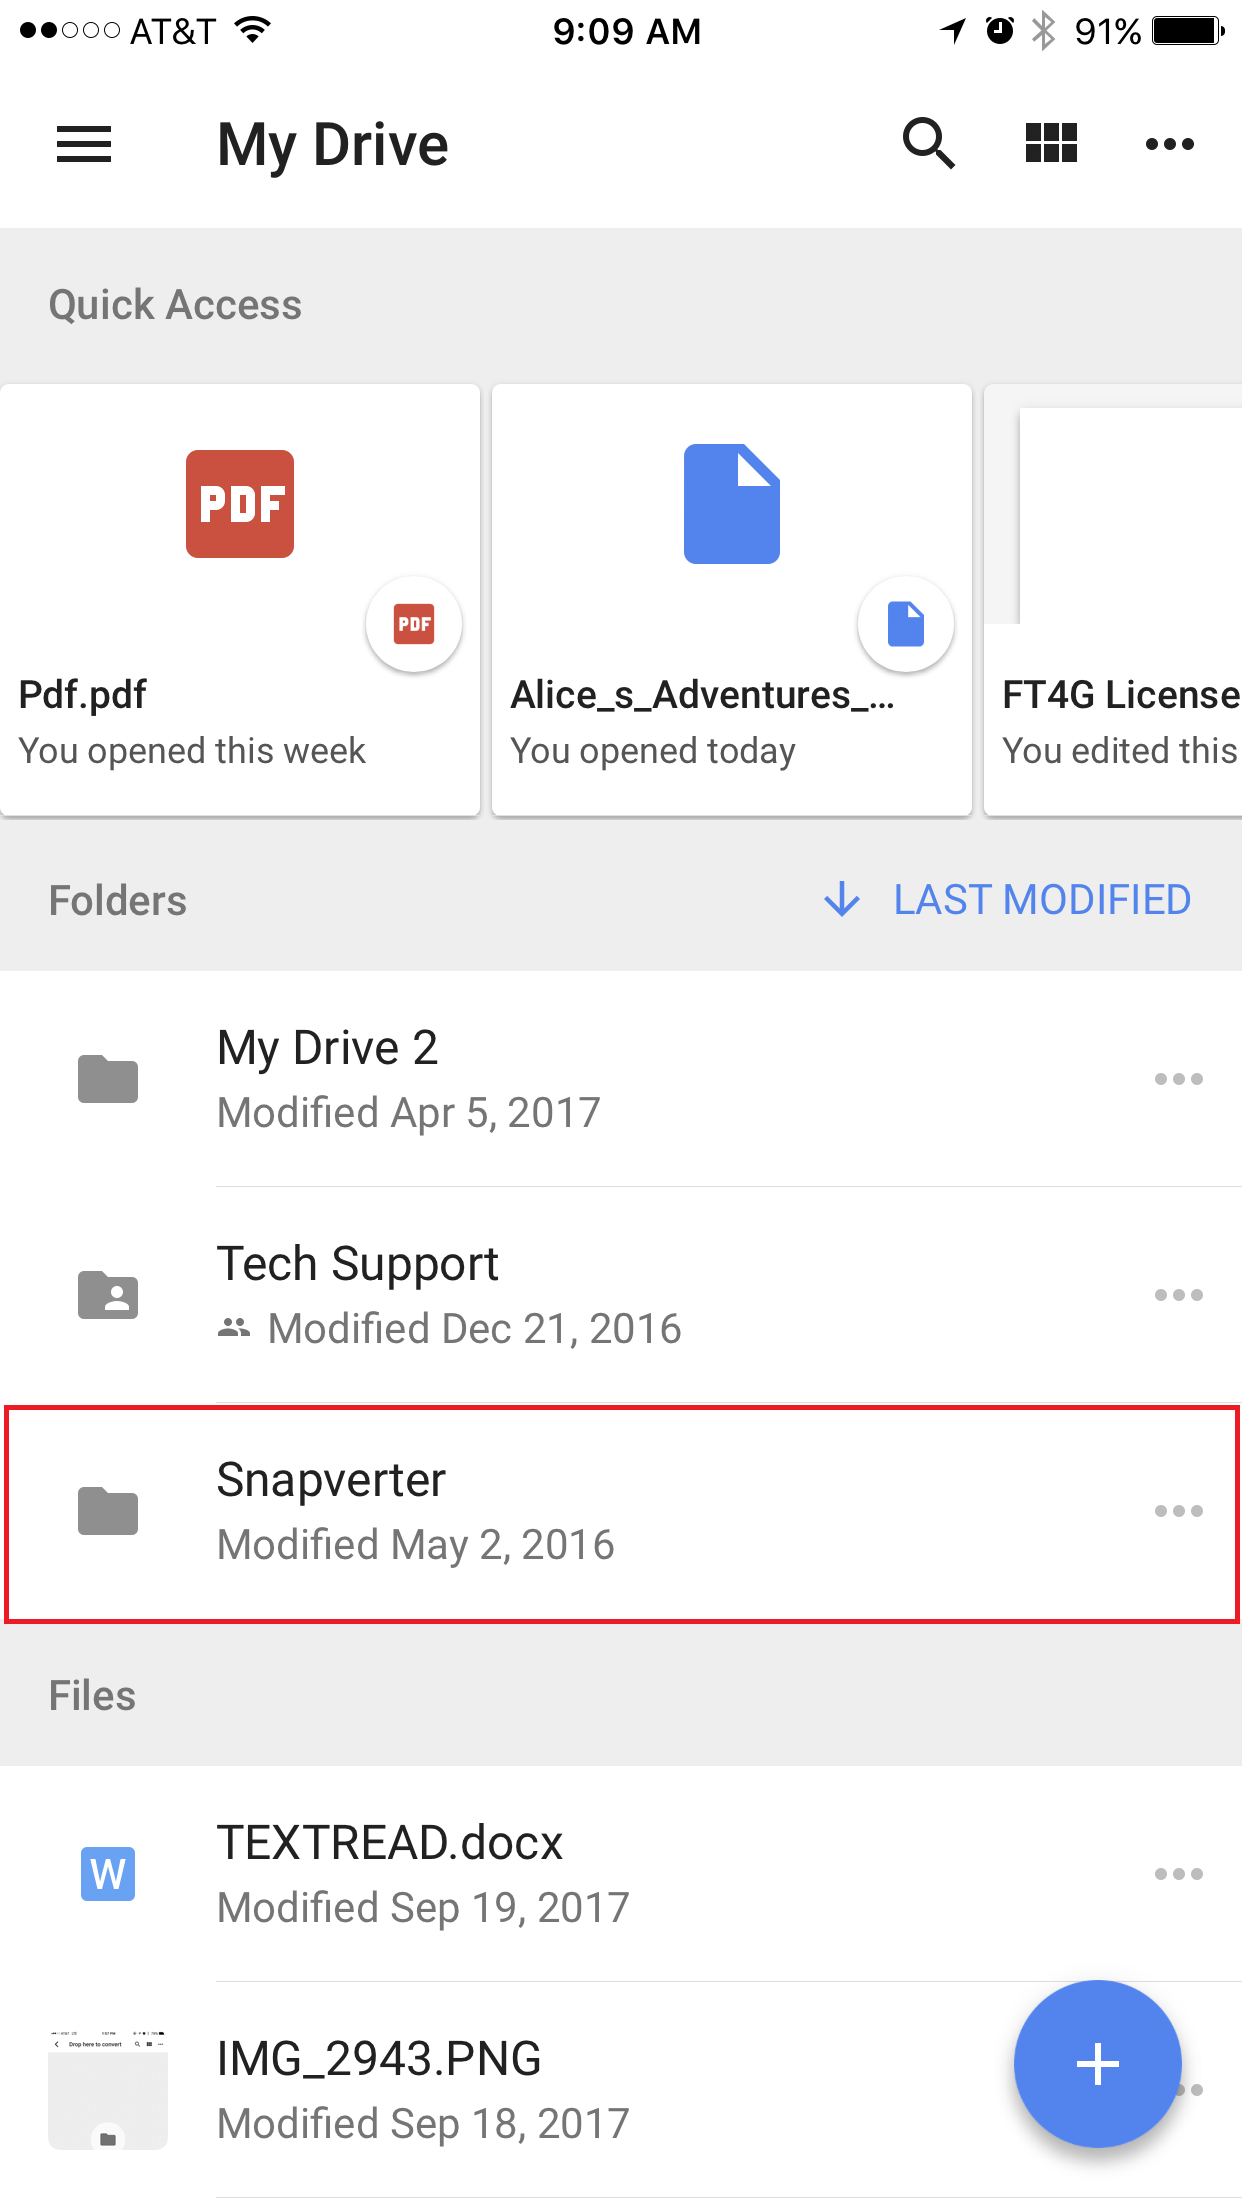 Snapverter folder within the drive app on phone